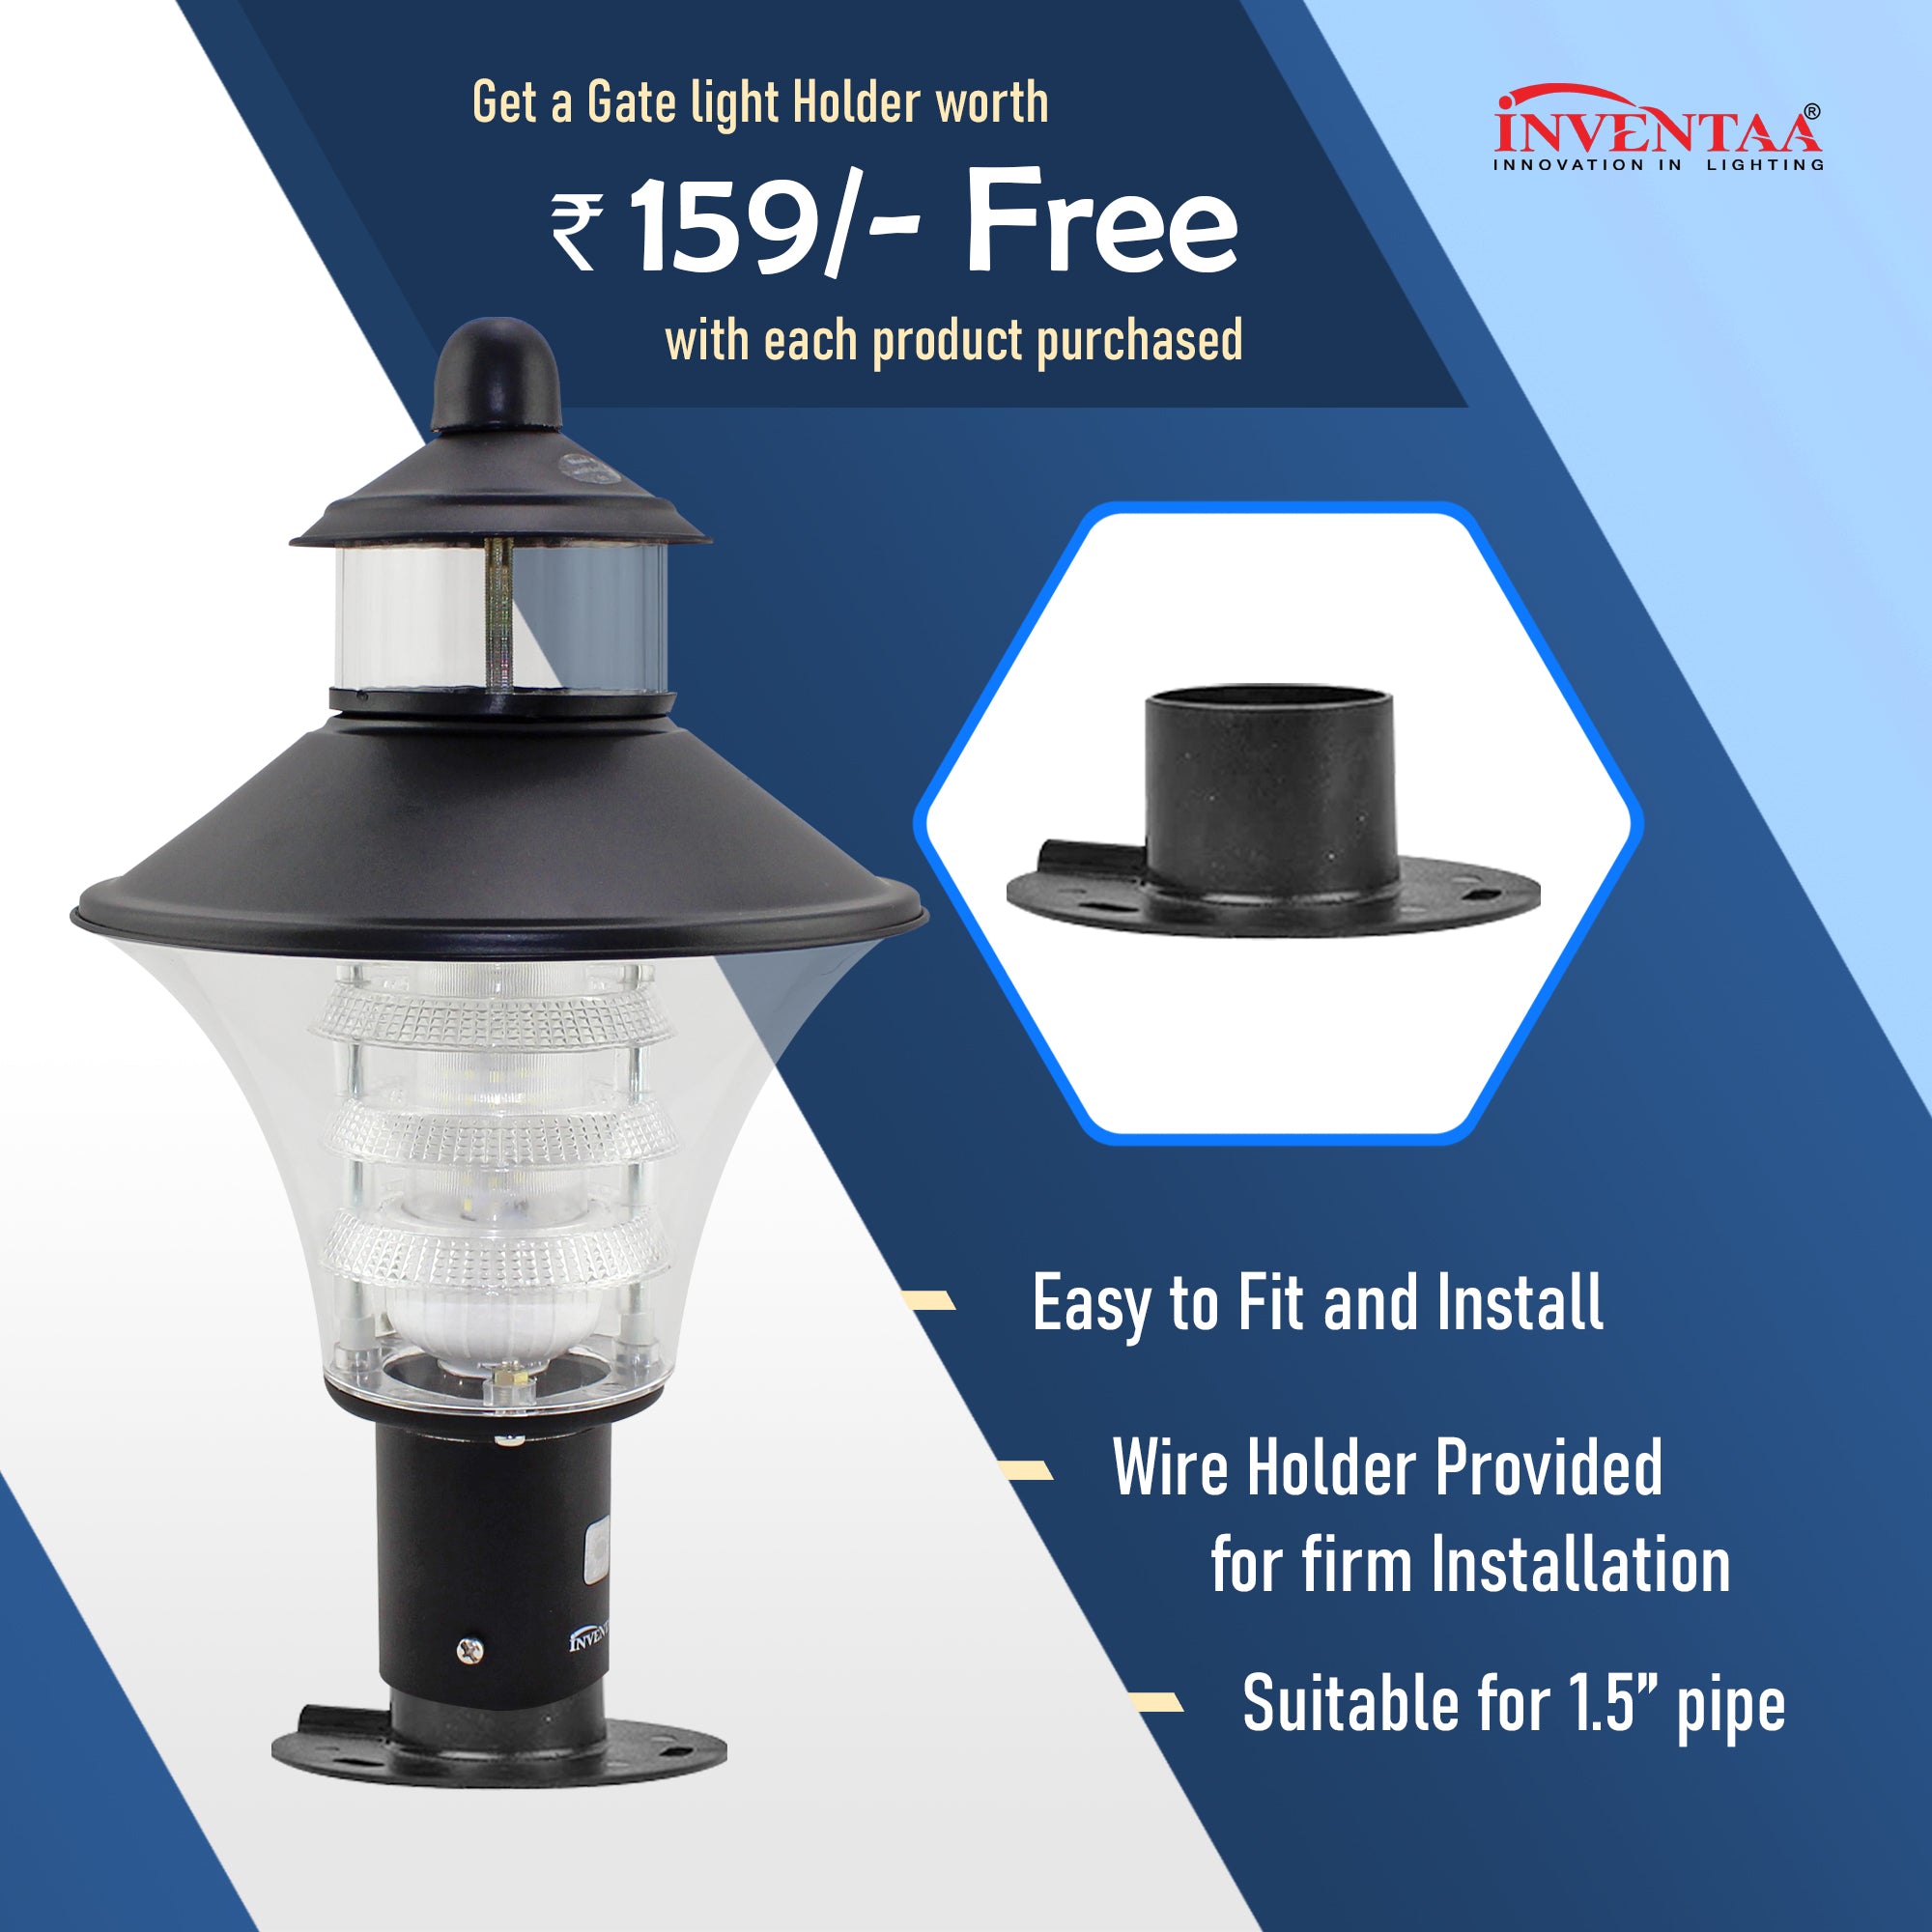 Free LED Gate Light Holder For Optic Fabula LH | Best LED Gate Light Model Online at affordable price Online #color_ss gloss clear